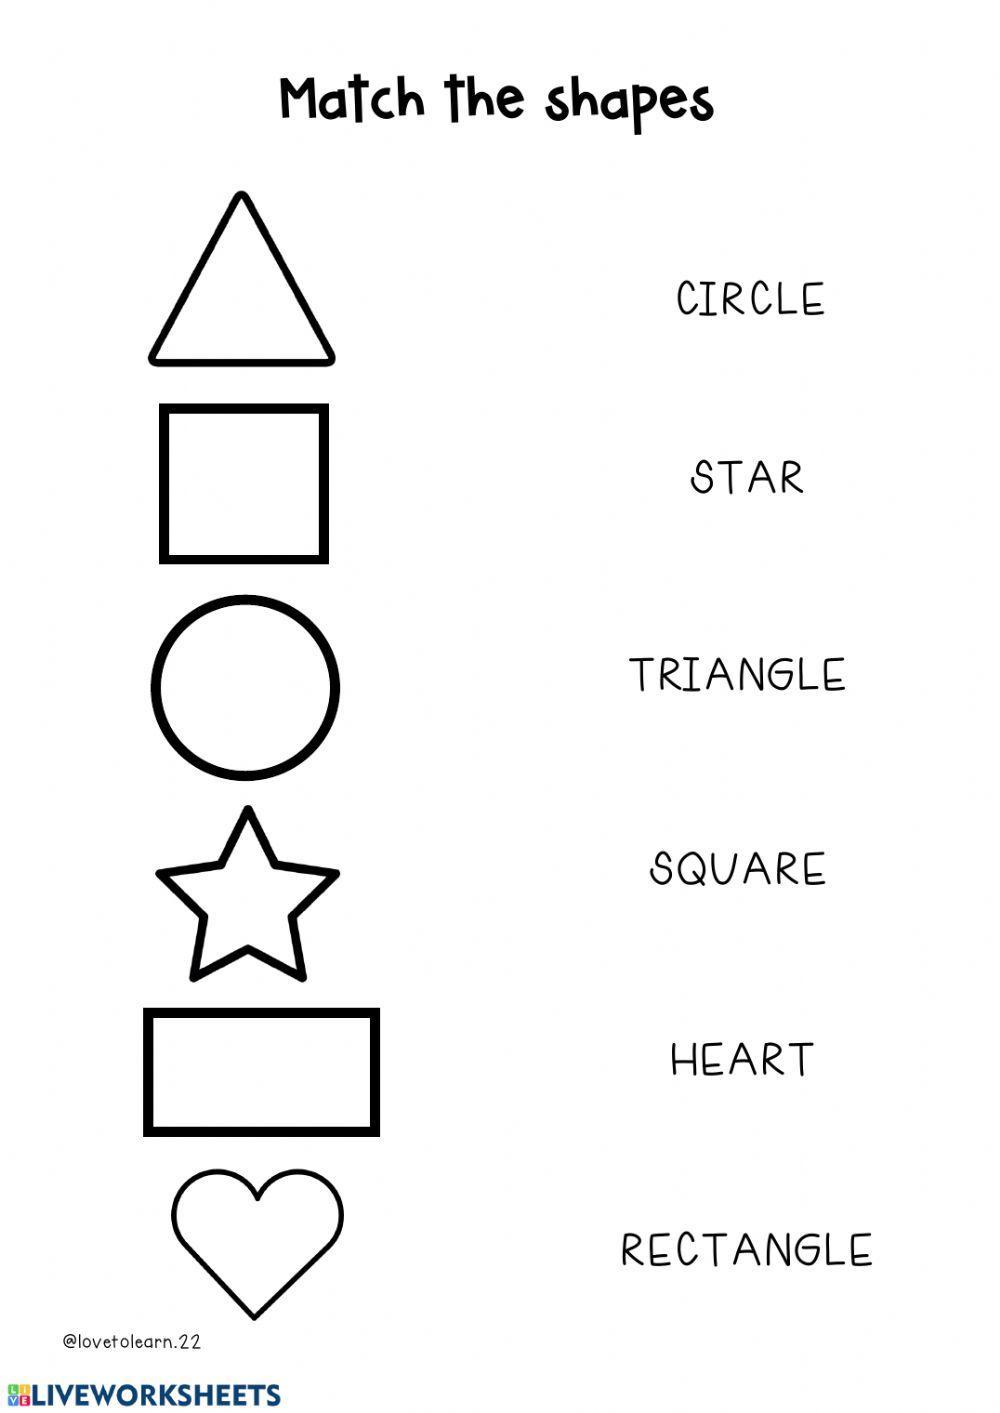 Geometric shapes - As formas geométricas em inglês - Inglês